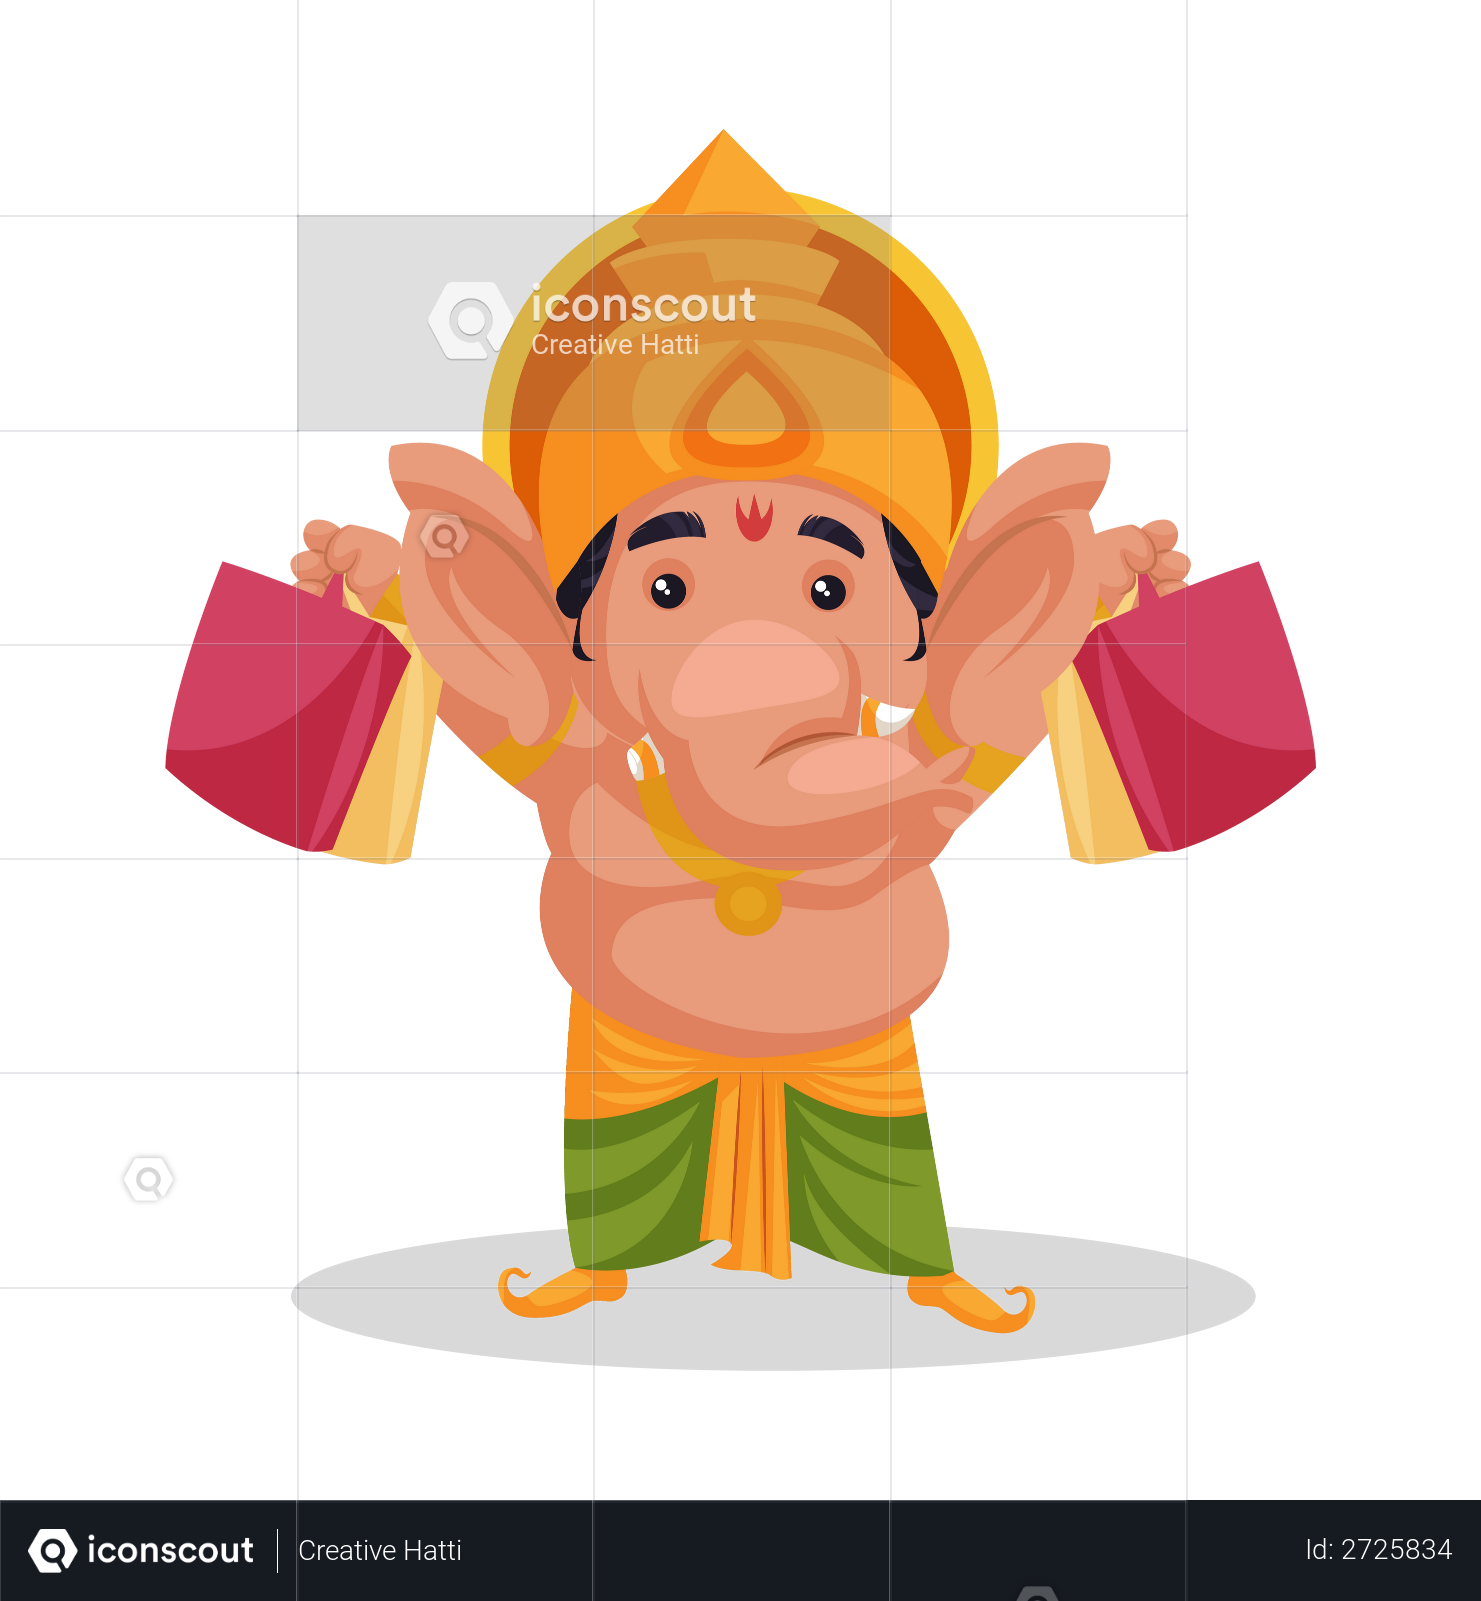 Chitrakoot vlog ham friends gye Ganesh bag 😜@souravjoshivlogs7028 - YouTube